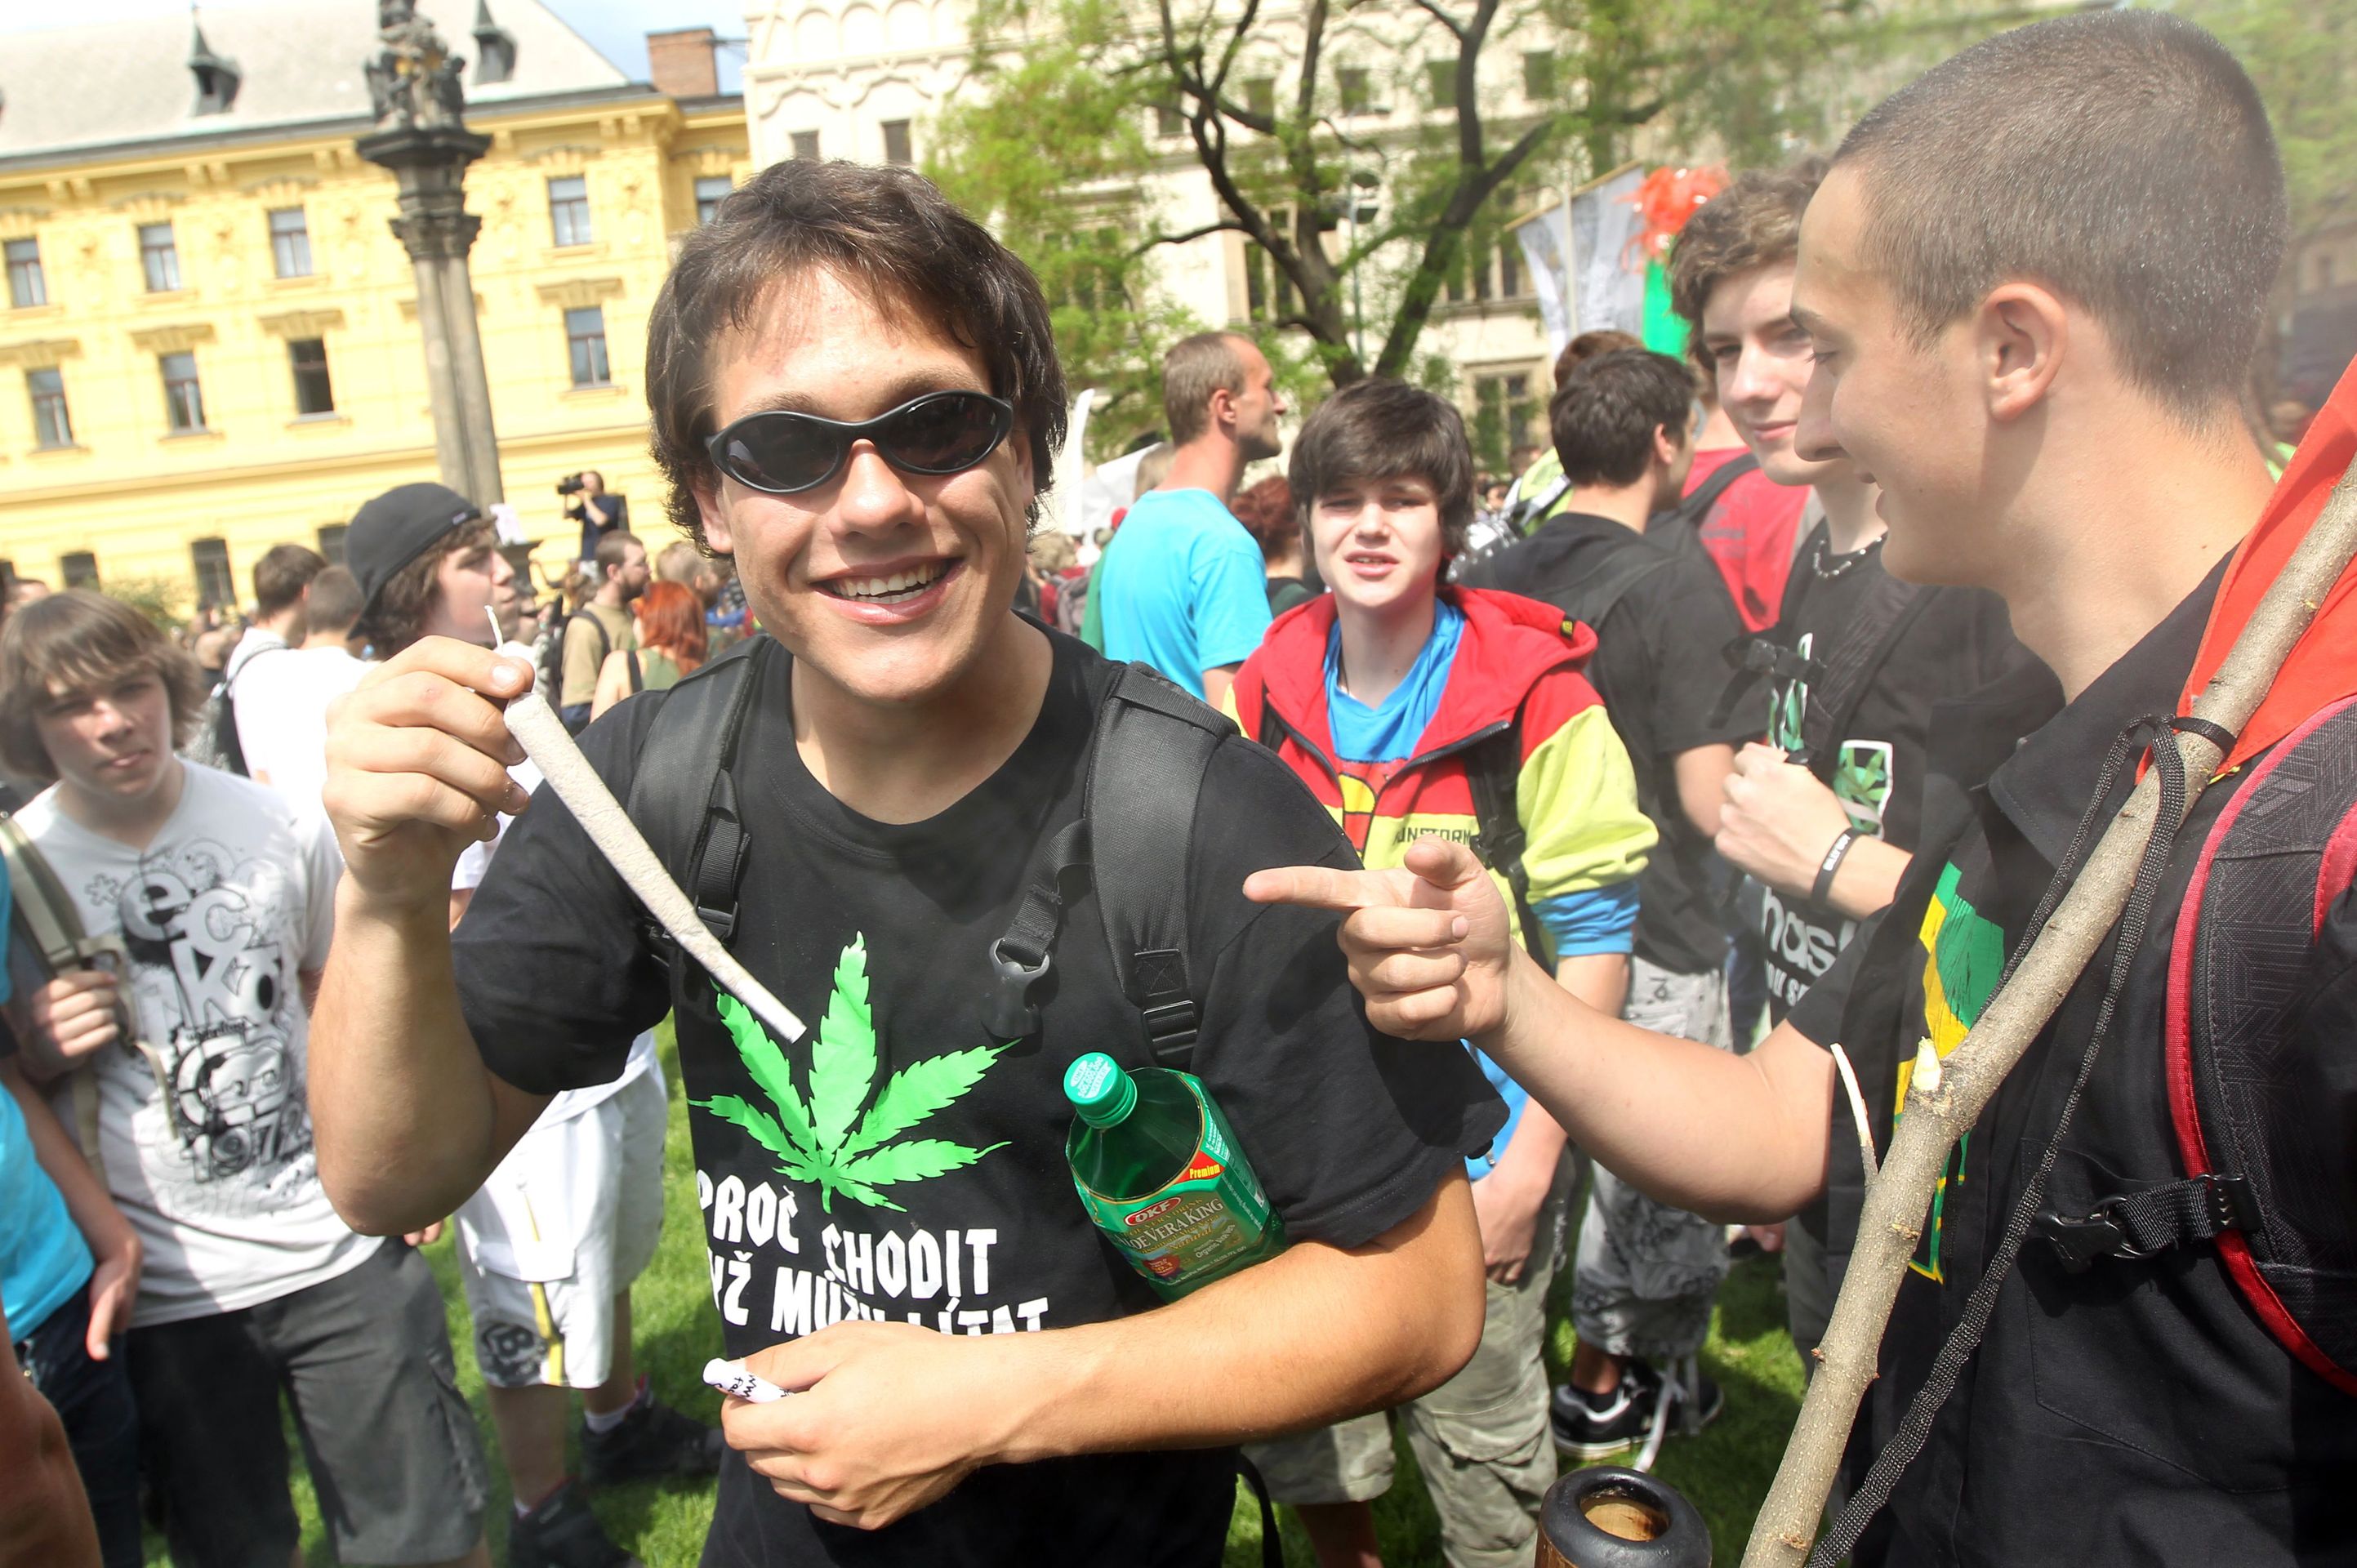 Million marihuana march 2012 - foto - 6 - Million marihuana march 2012 - foto (11/16)